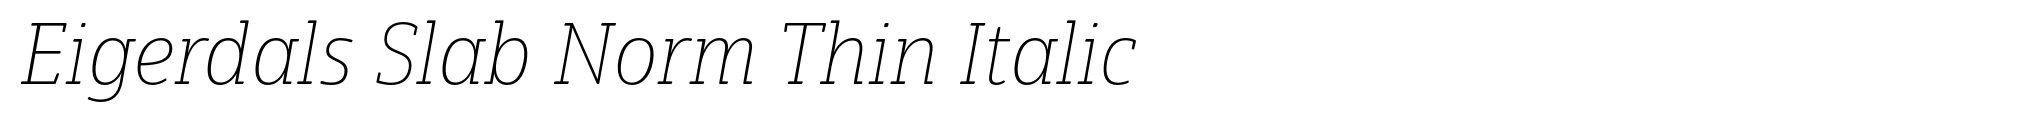 Eigerdals Slab Norm Thin Italic image